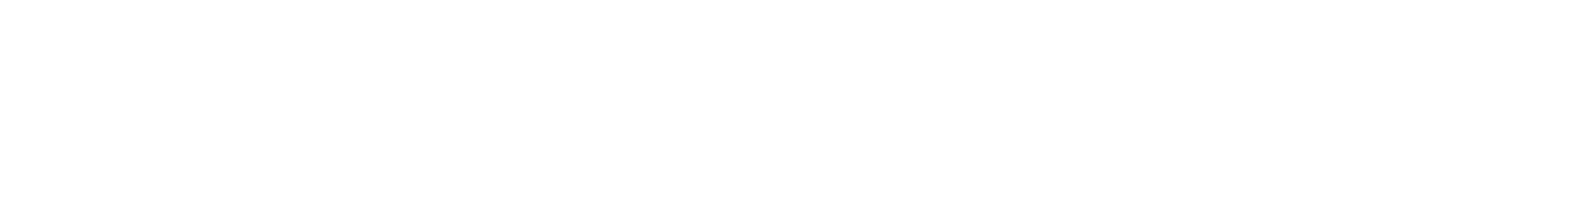 Tutor Perini
 logo large for dark backgrounds (transparent PNG)